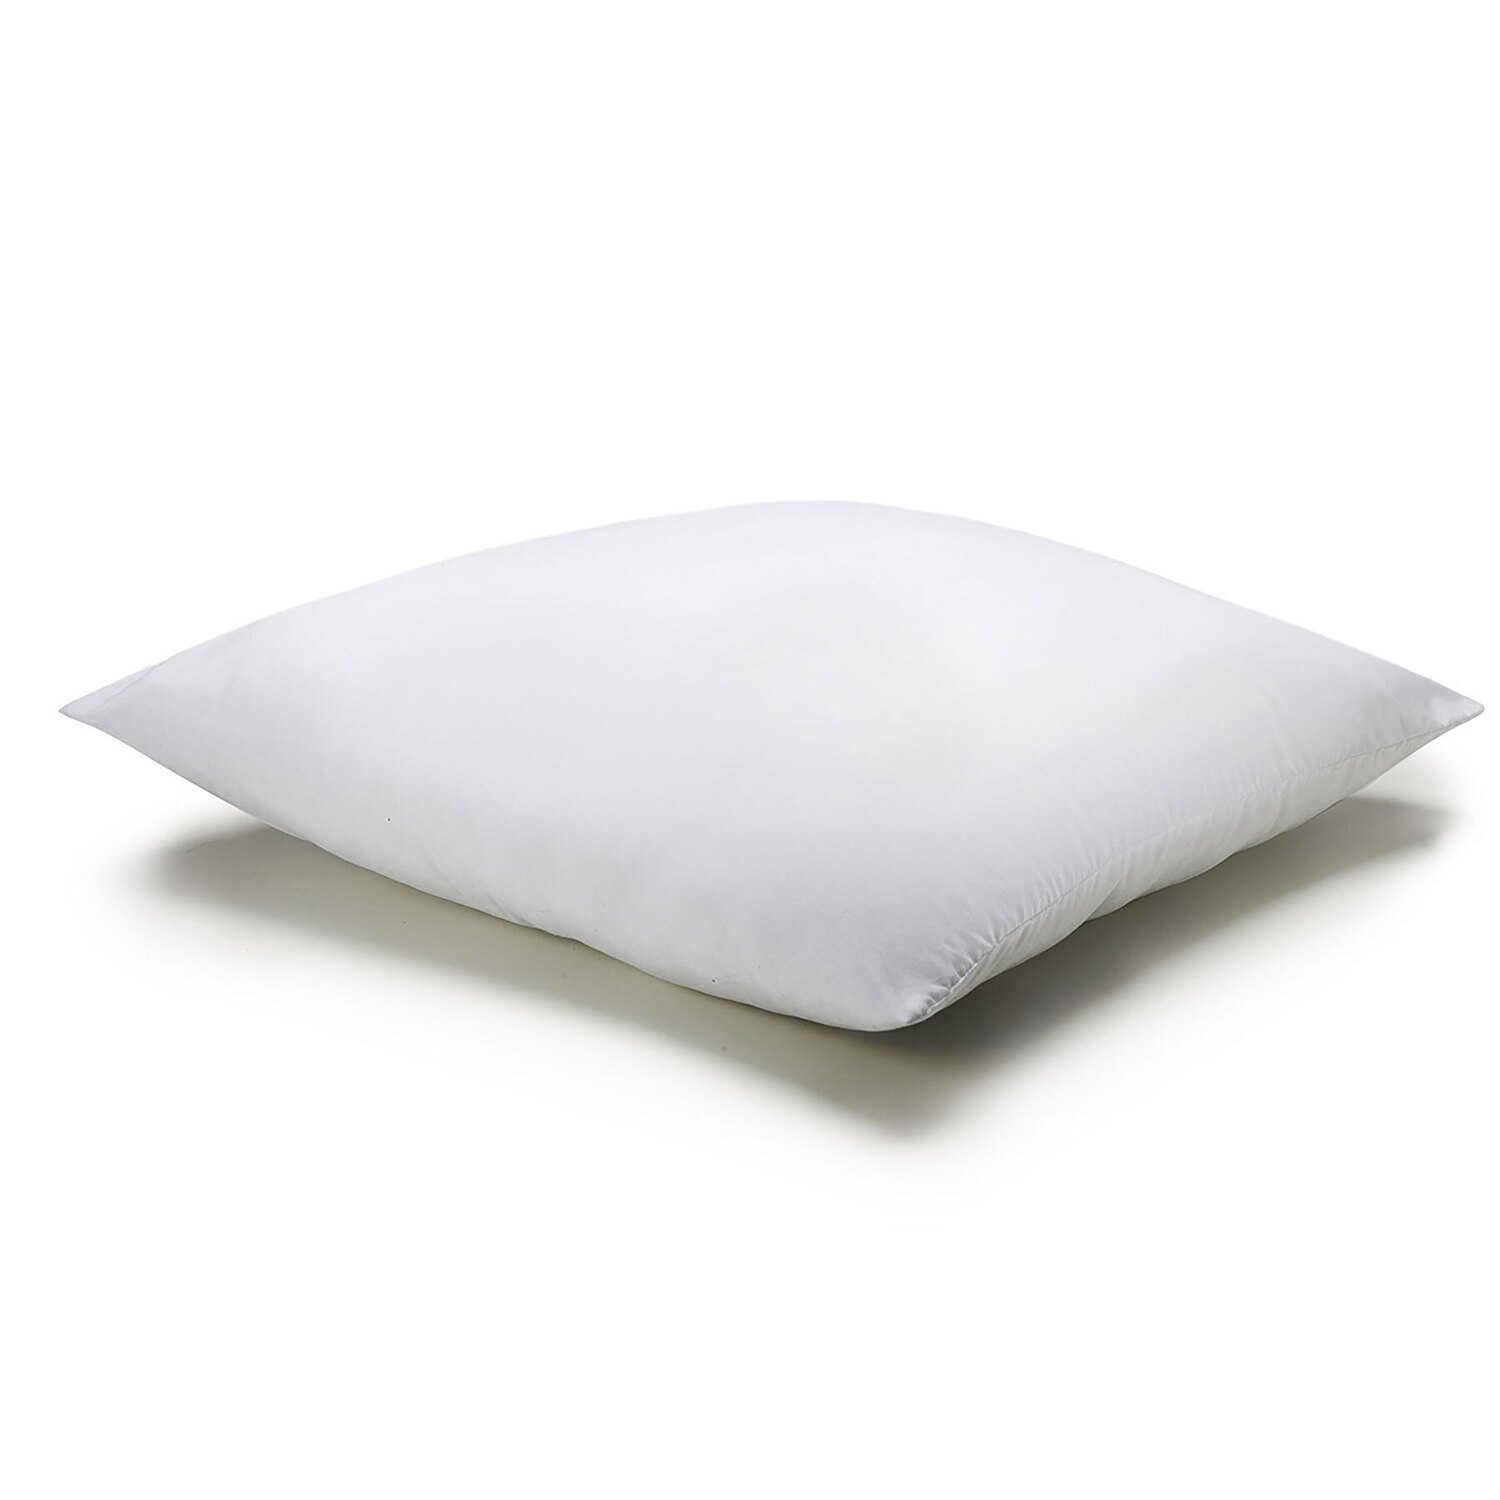 Le Jacquard Francais Coussin White Cushion 12 x 20 Inch 25461